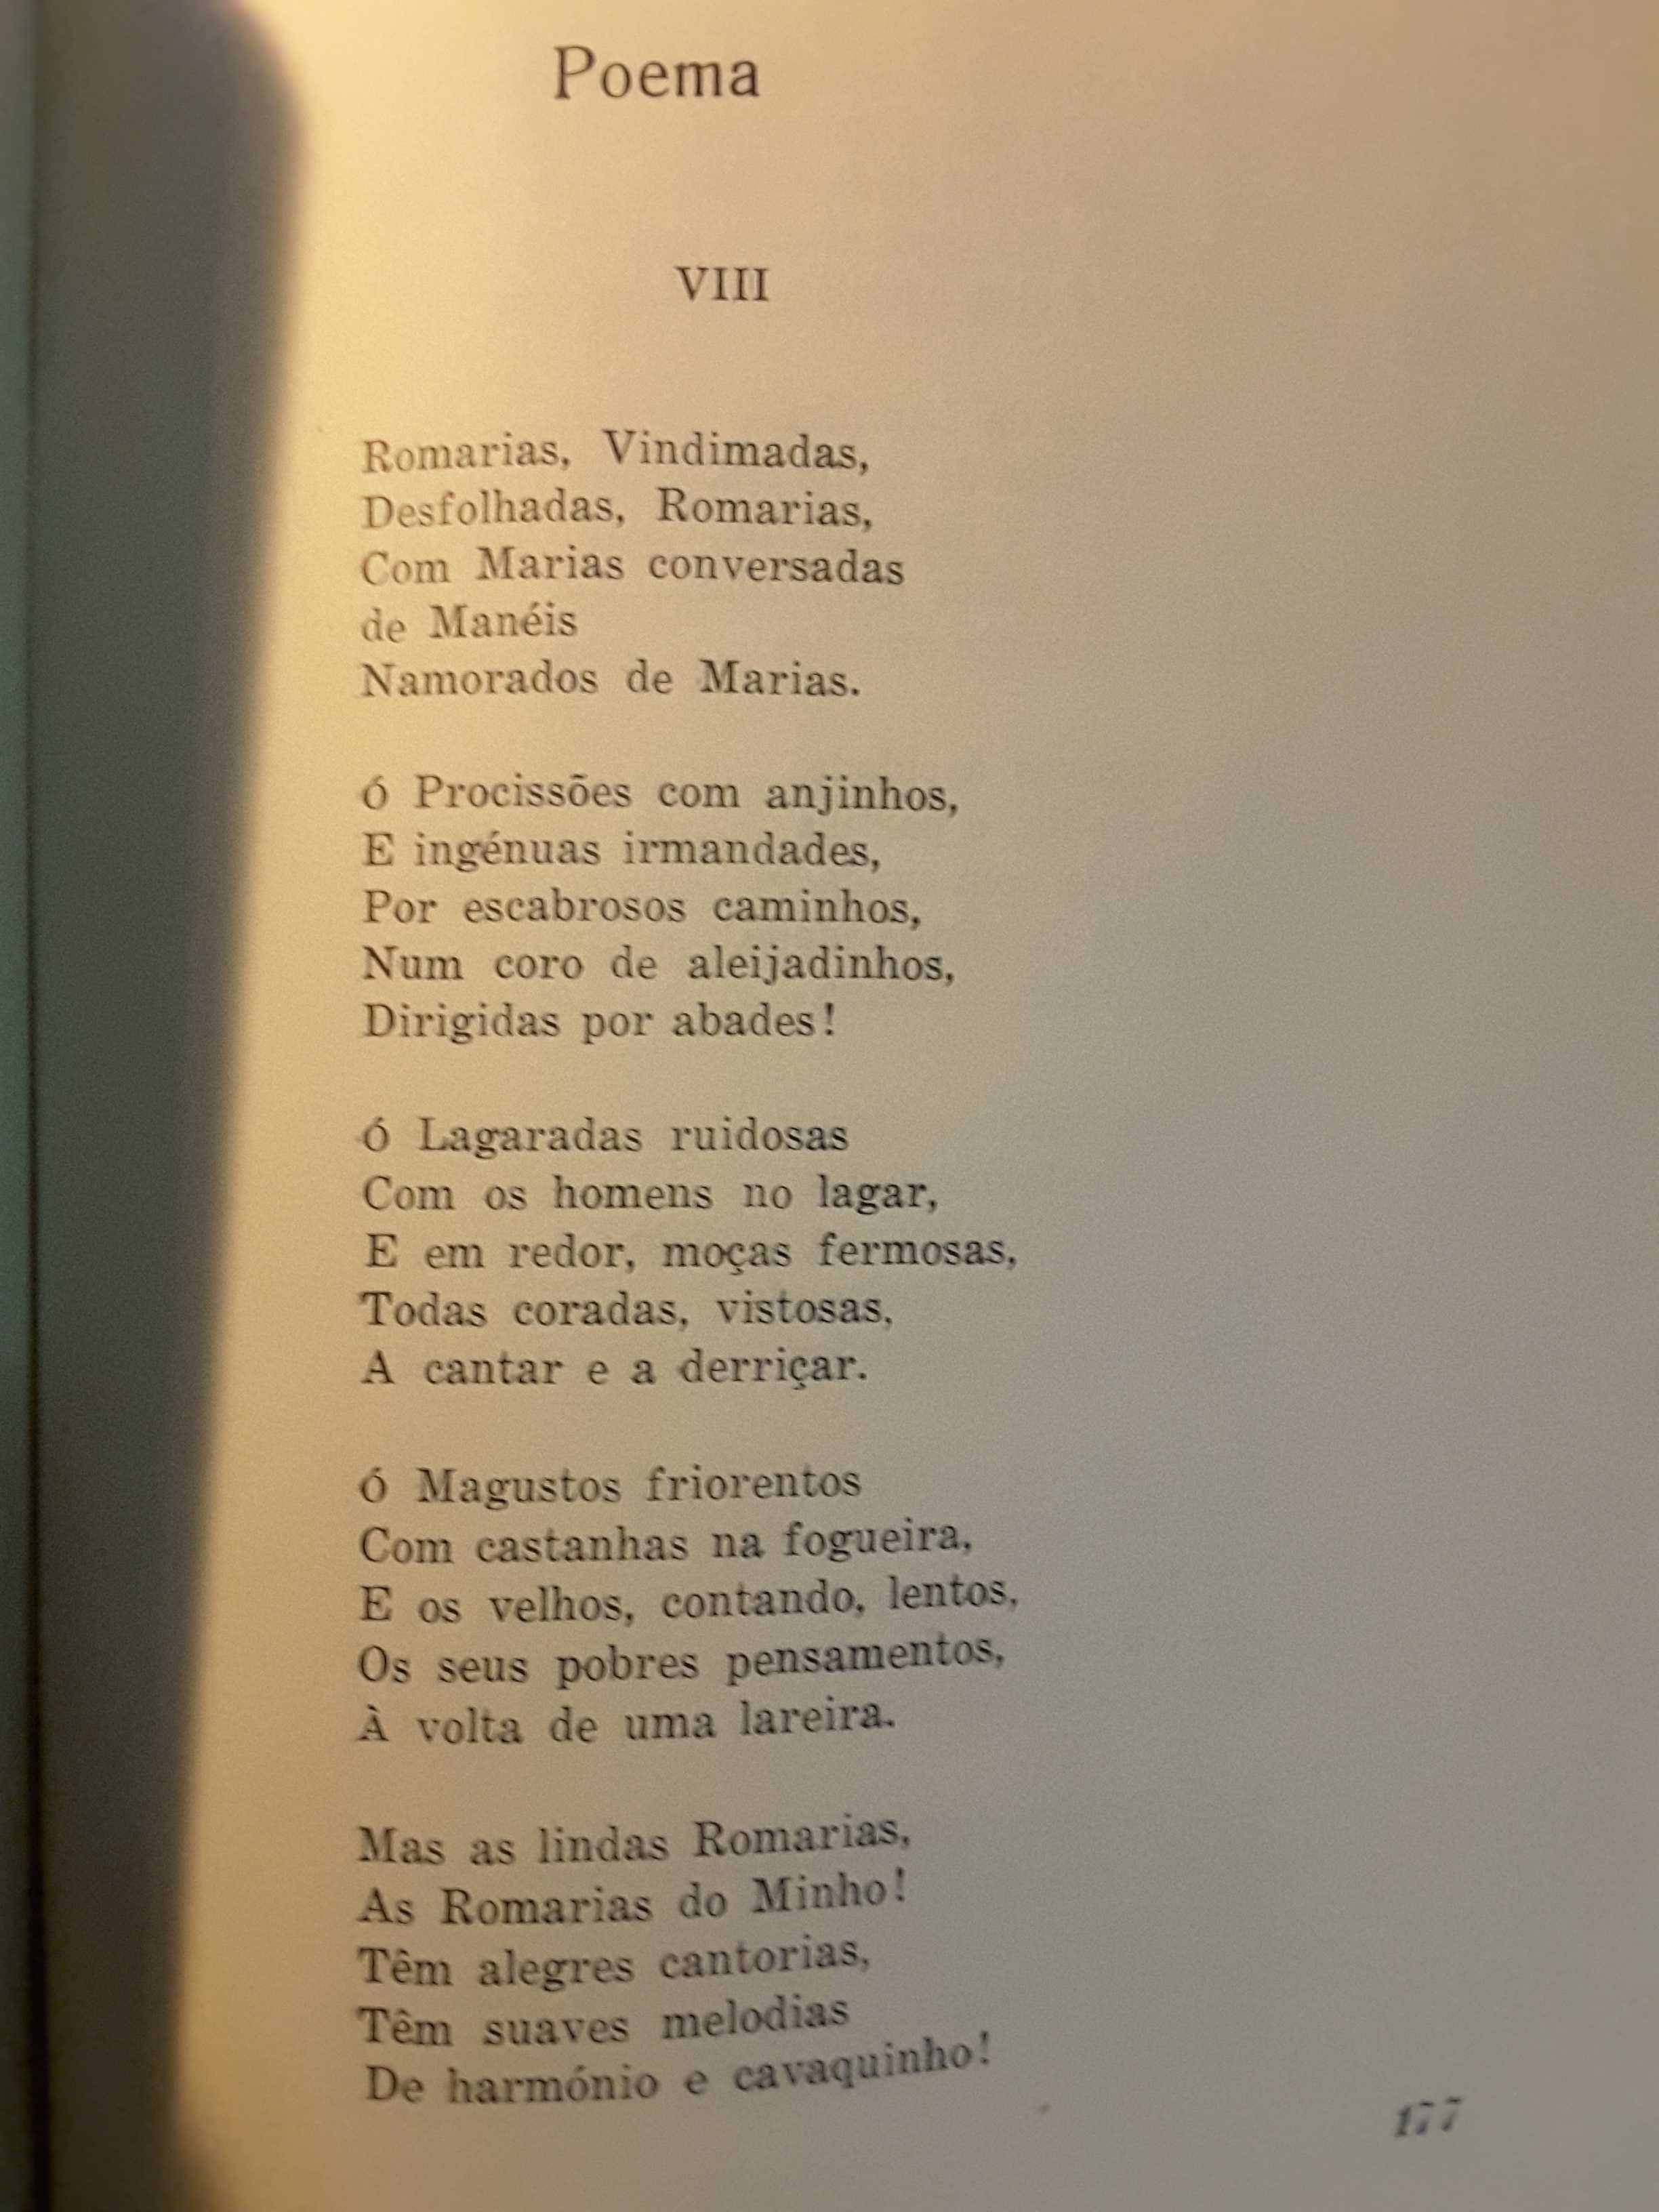 Alfredo Pimenta Terra e Poesia / A. Search (F. Pessoa): Poesia